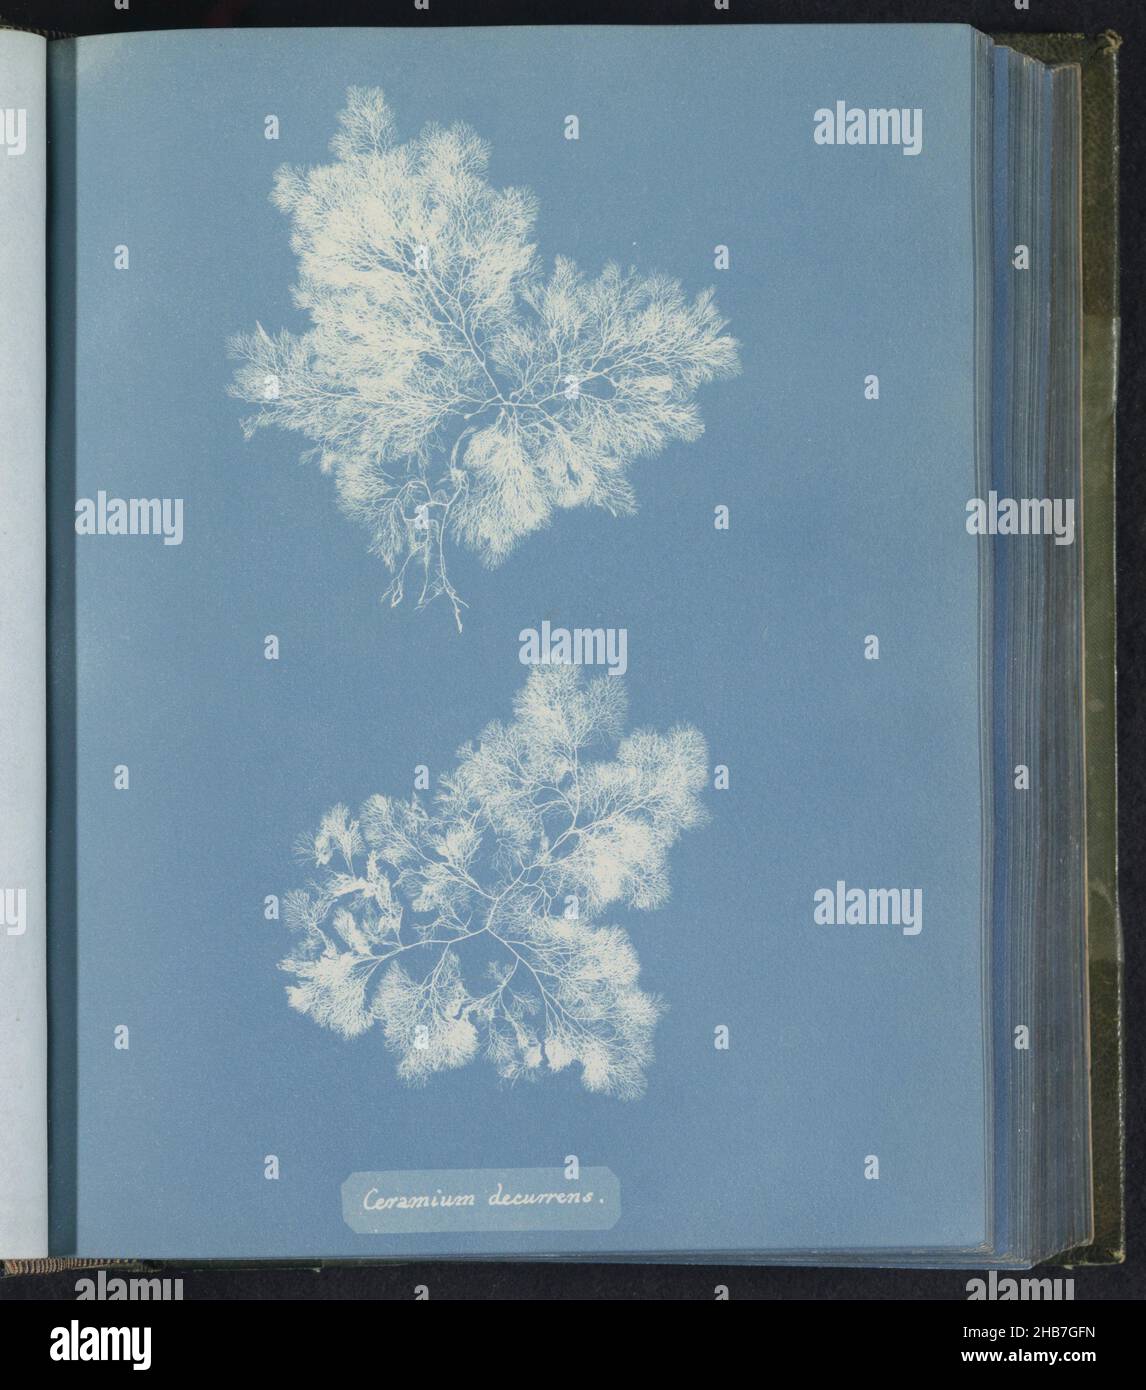 Ceramium decurrens, Anna Atkins, United Kingdom, c. 1843 - c. 1853, photographic support, cyanotype, height 250 mm × width 200 mm Stock Photo